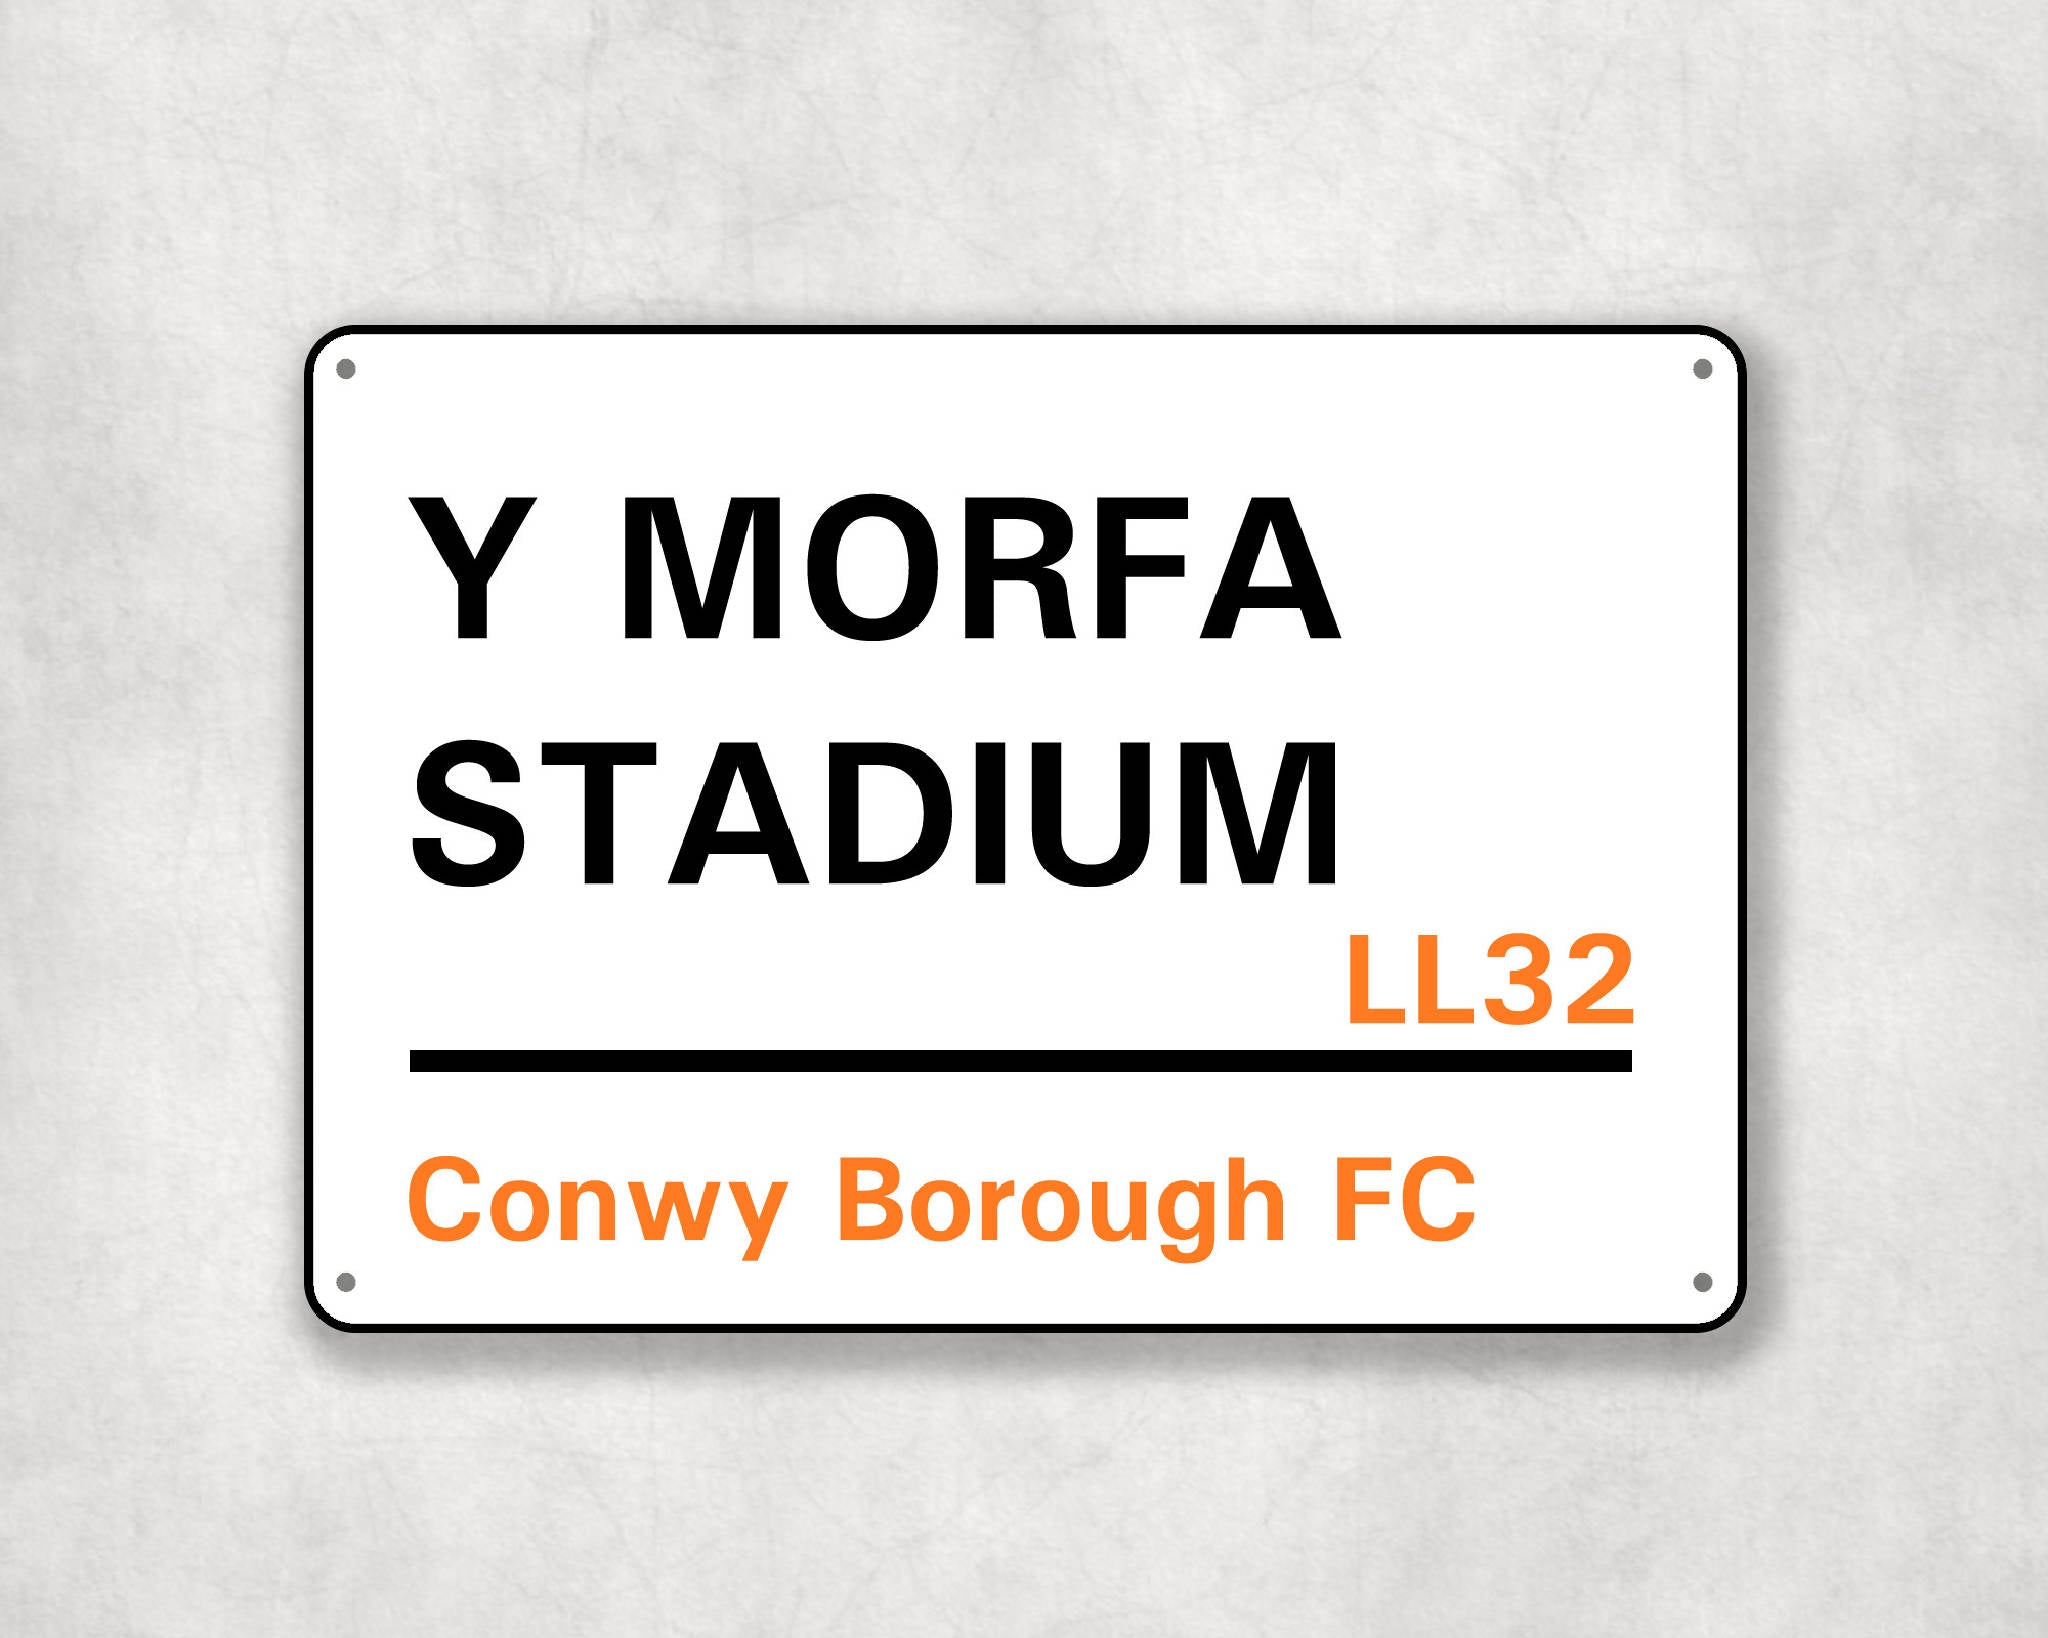 Y Morfa Stadium - Conwy Borough FC aluminium printed metal street sign - gift, keepsake, football gift